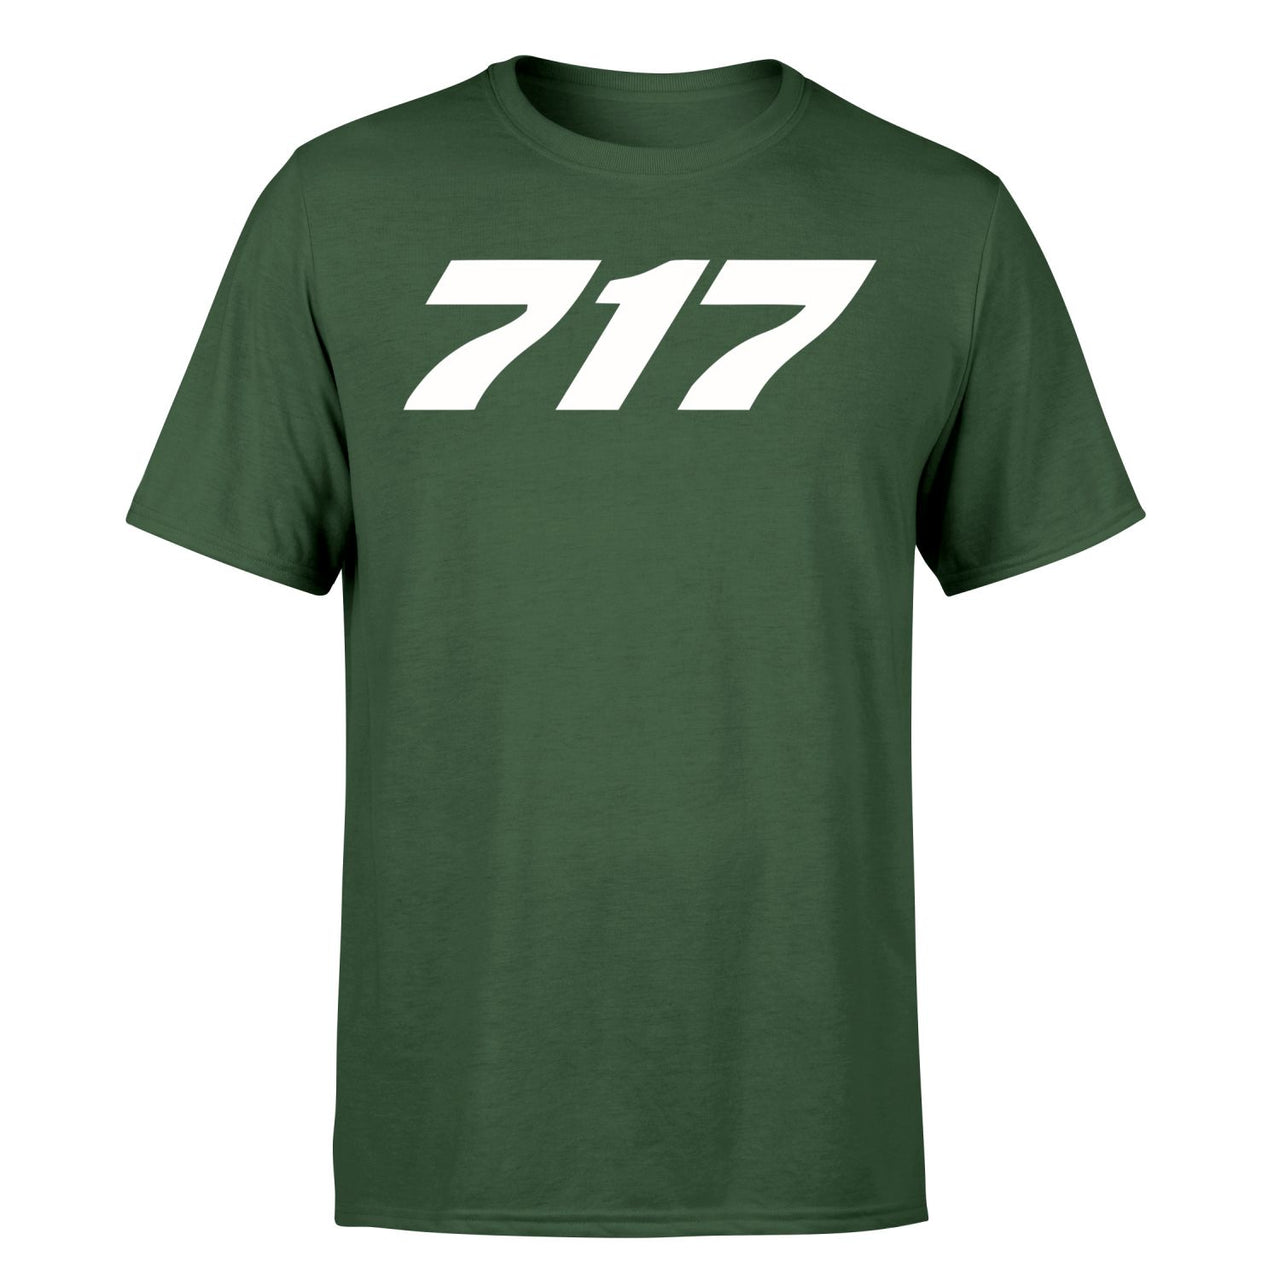 717 Flat Text Designed T-Shirts